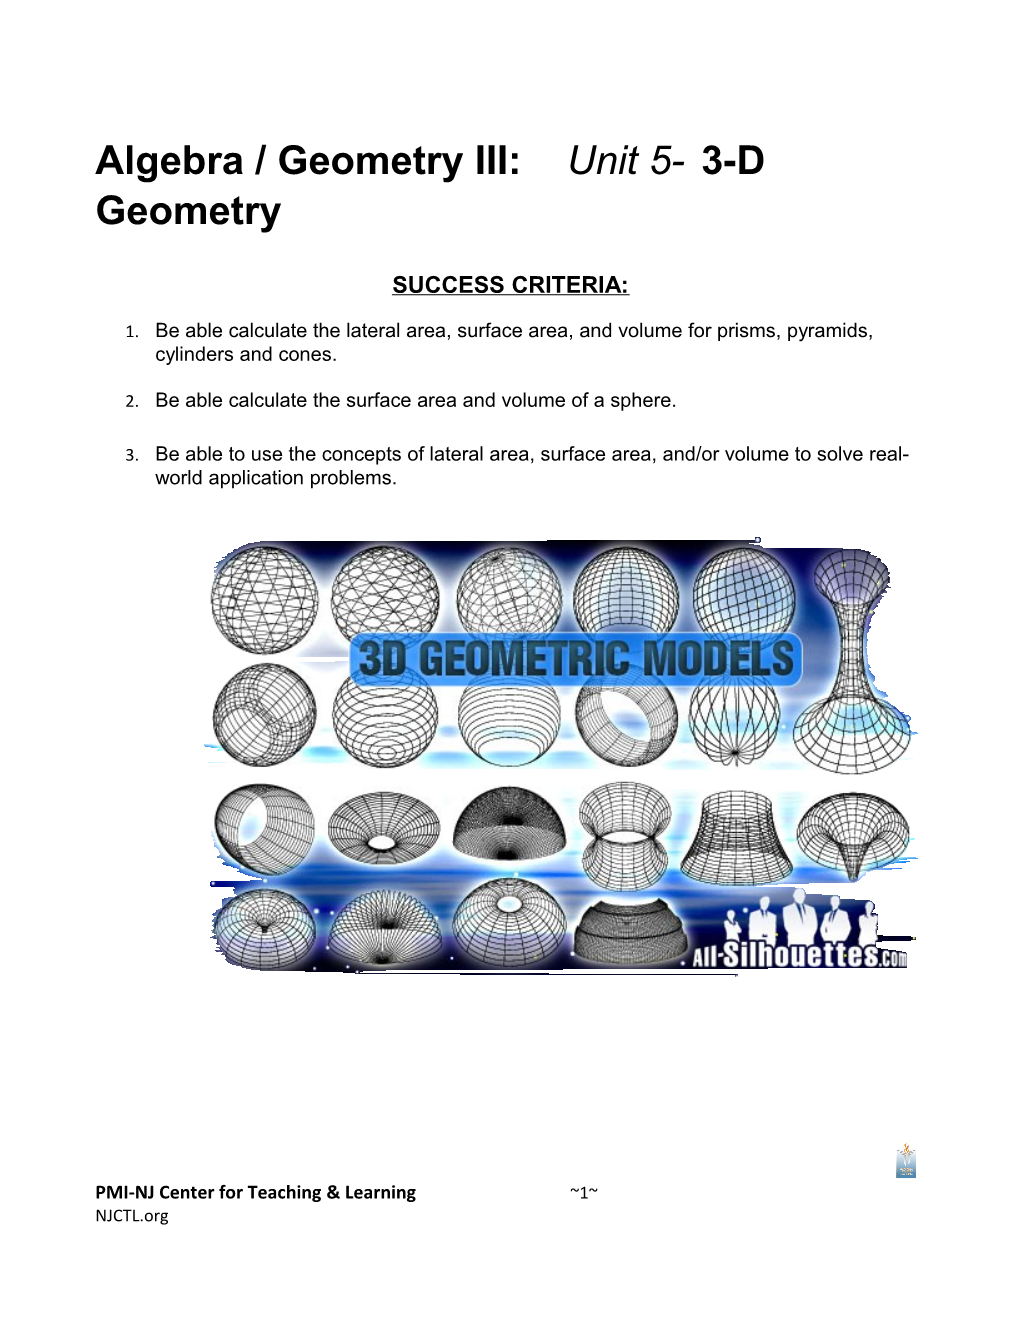 Algebra / Geometry III: Unit 5-3-D Geometry